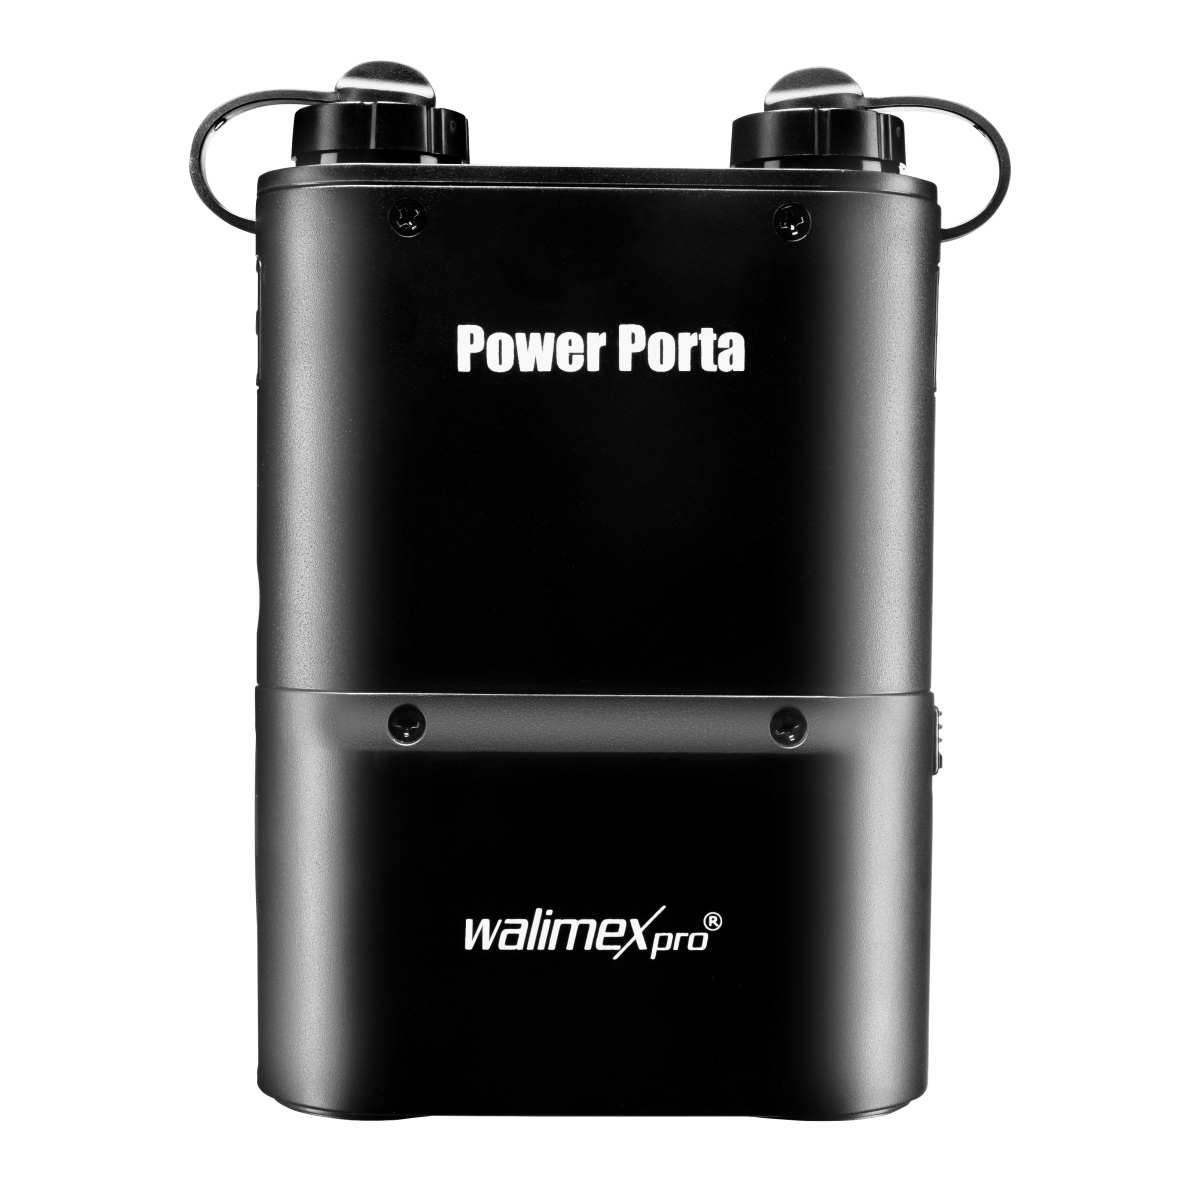 Walimex pro Power Porta black